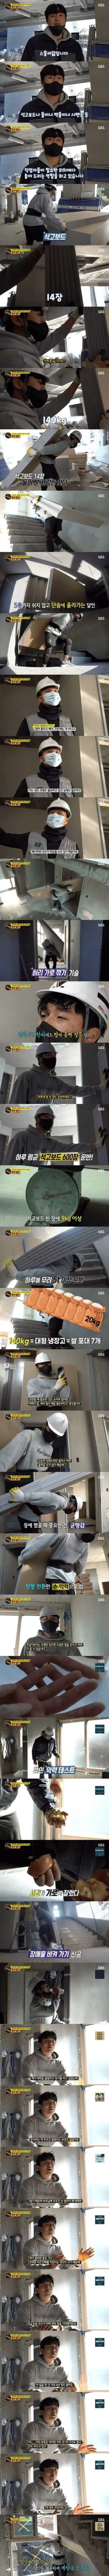 140kg 석고보드 드는 28살 청년 | mbong.kr 엠봉